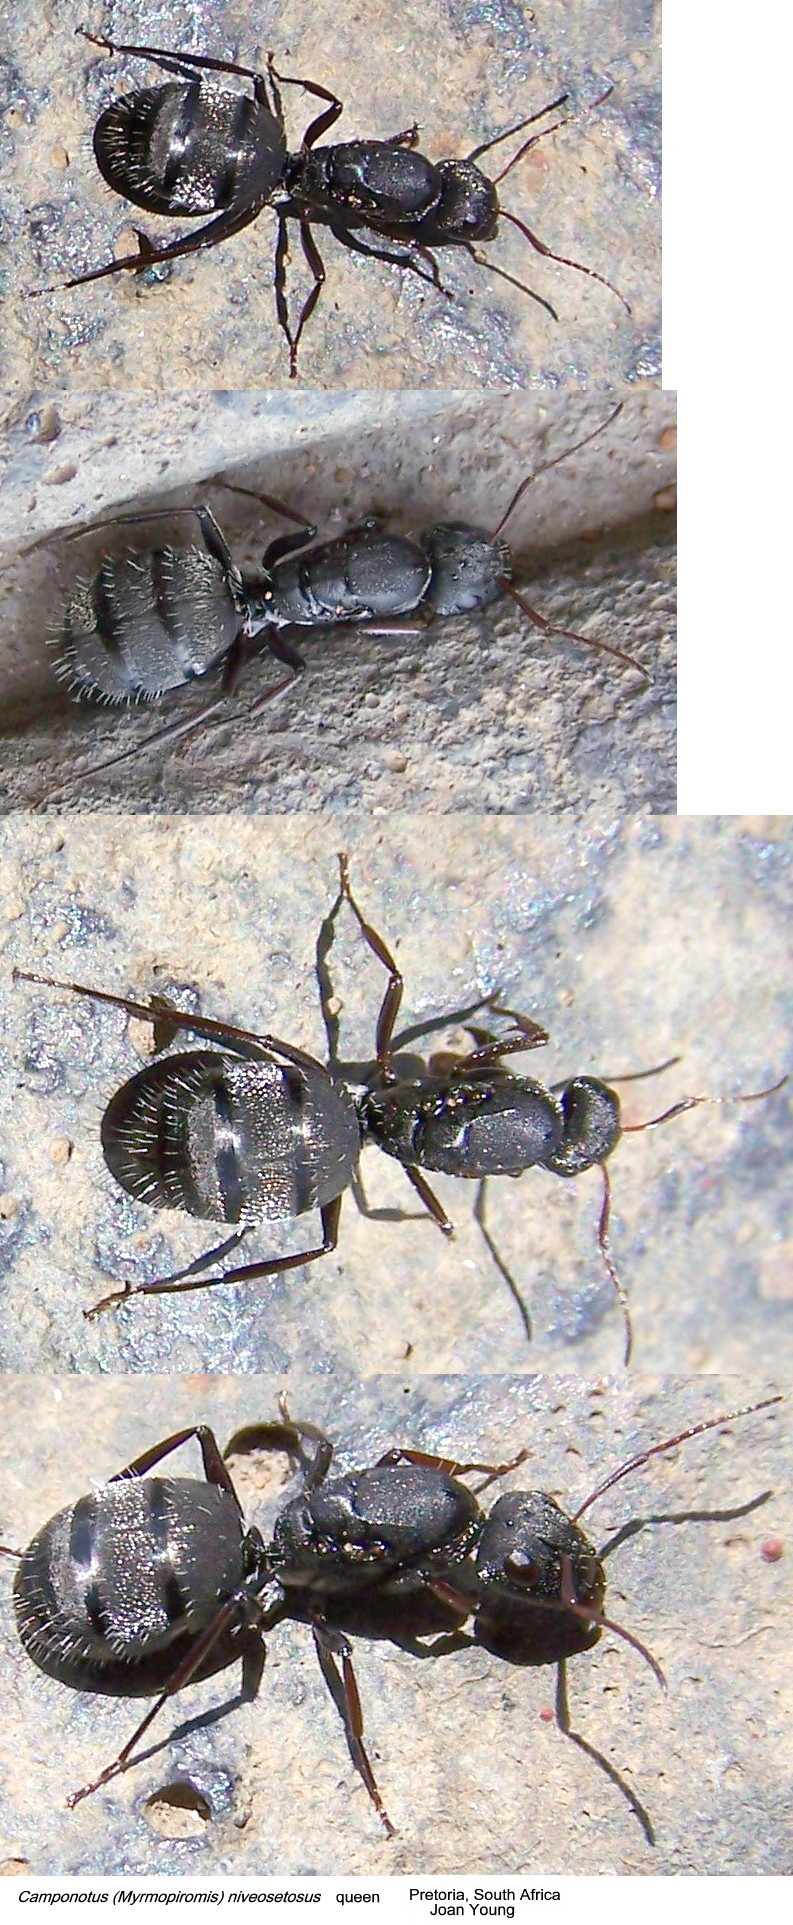 {Camponotus niveosetosus queen}